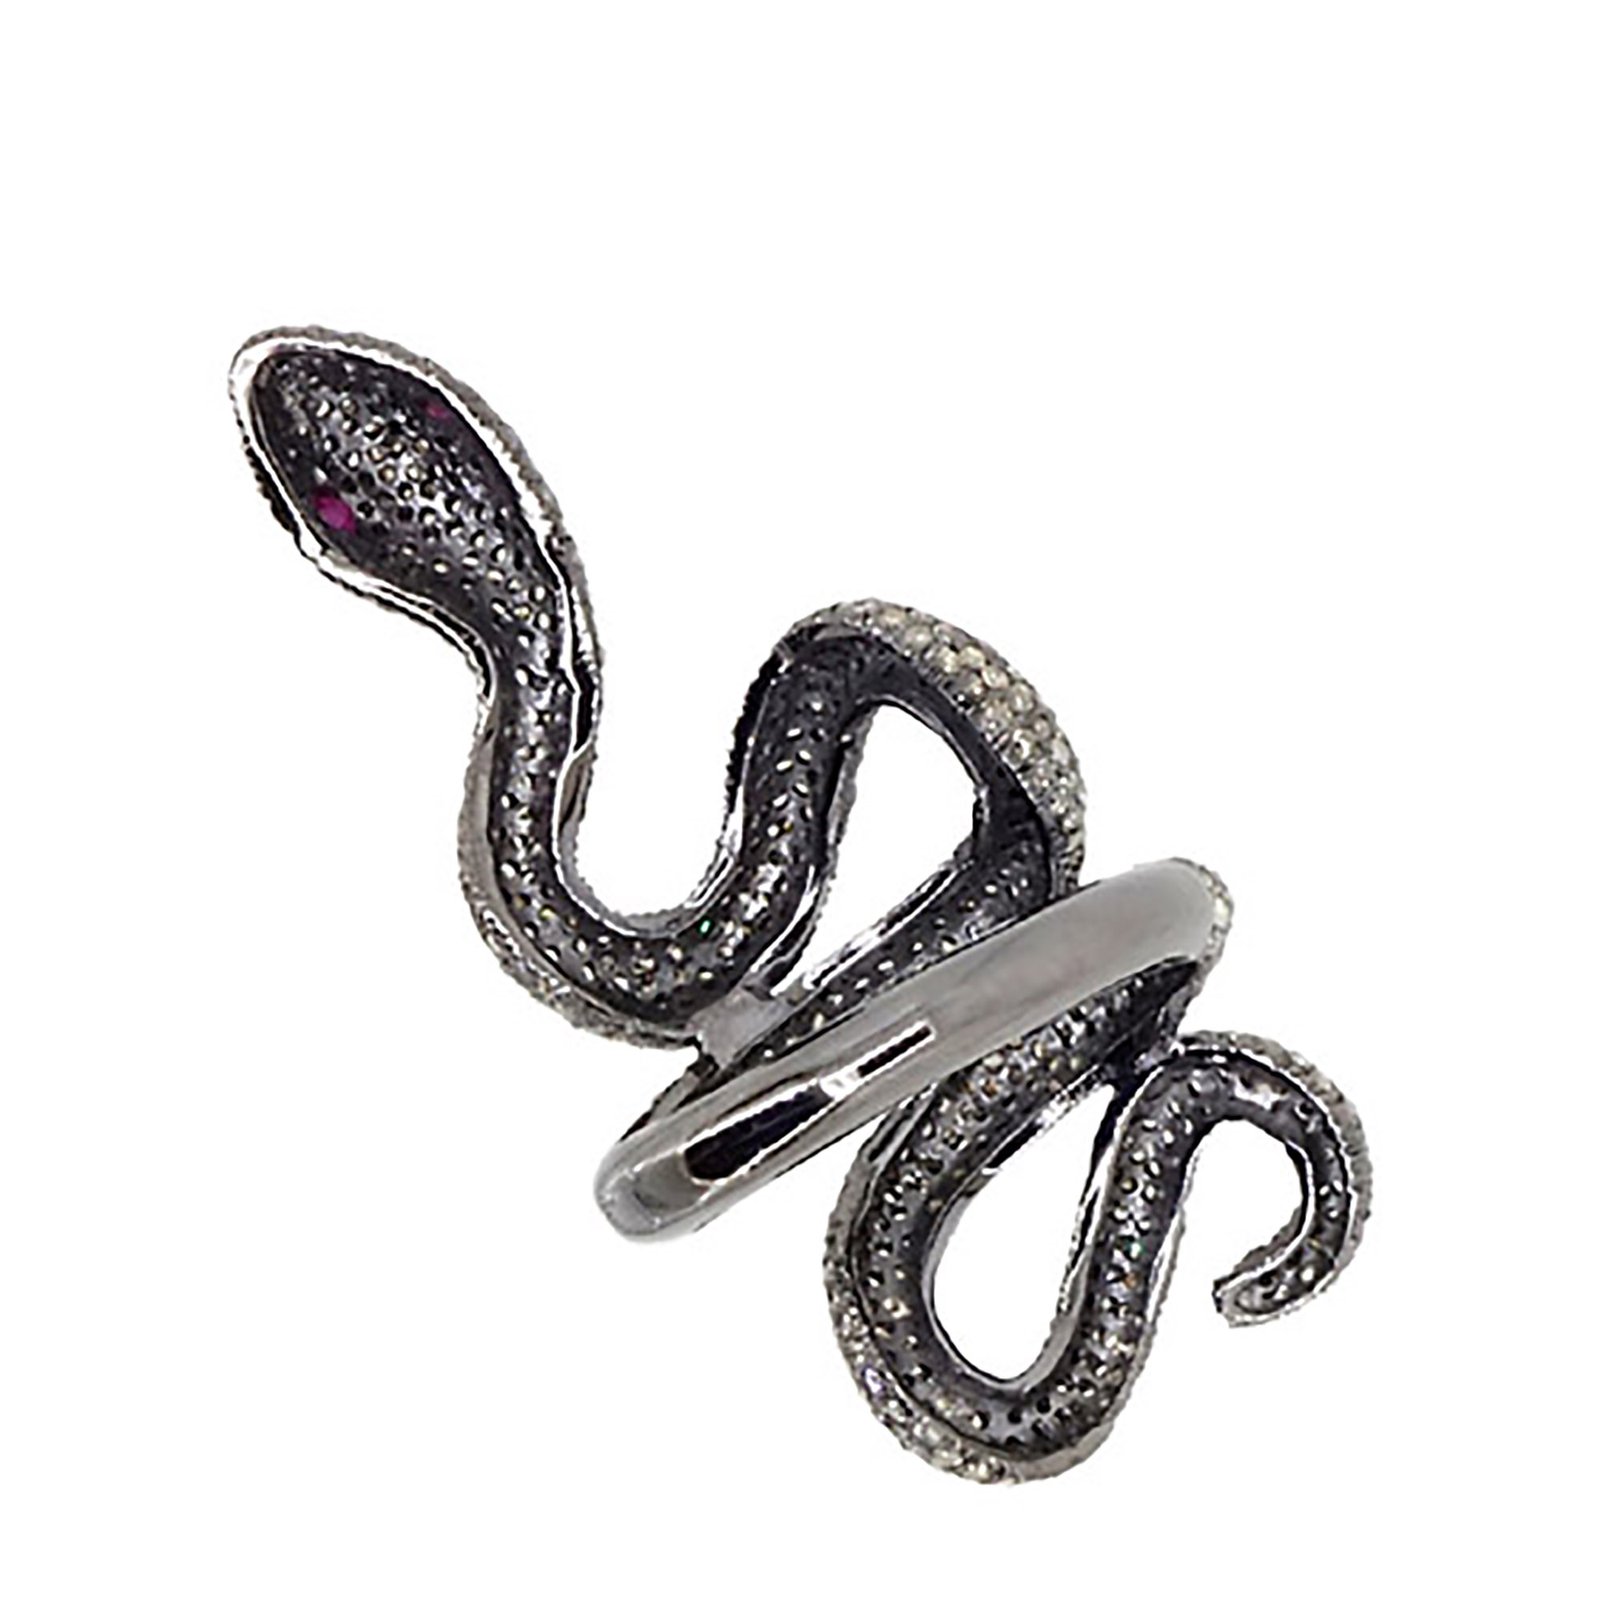 Natural diamond snake ring vintage jewelry